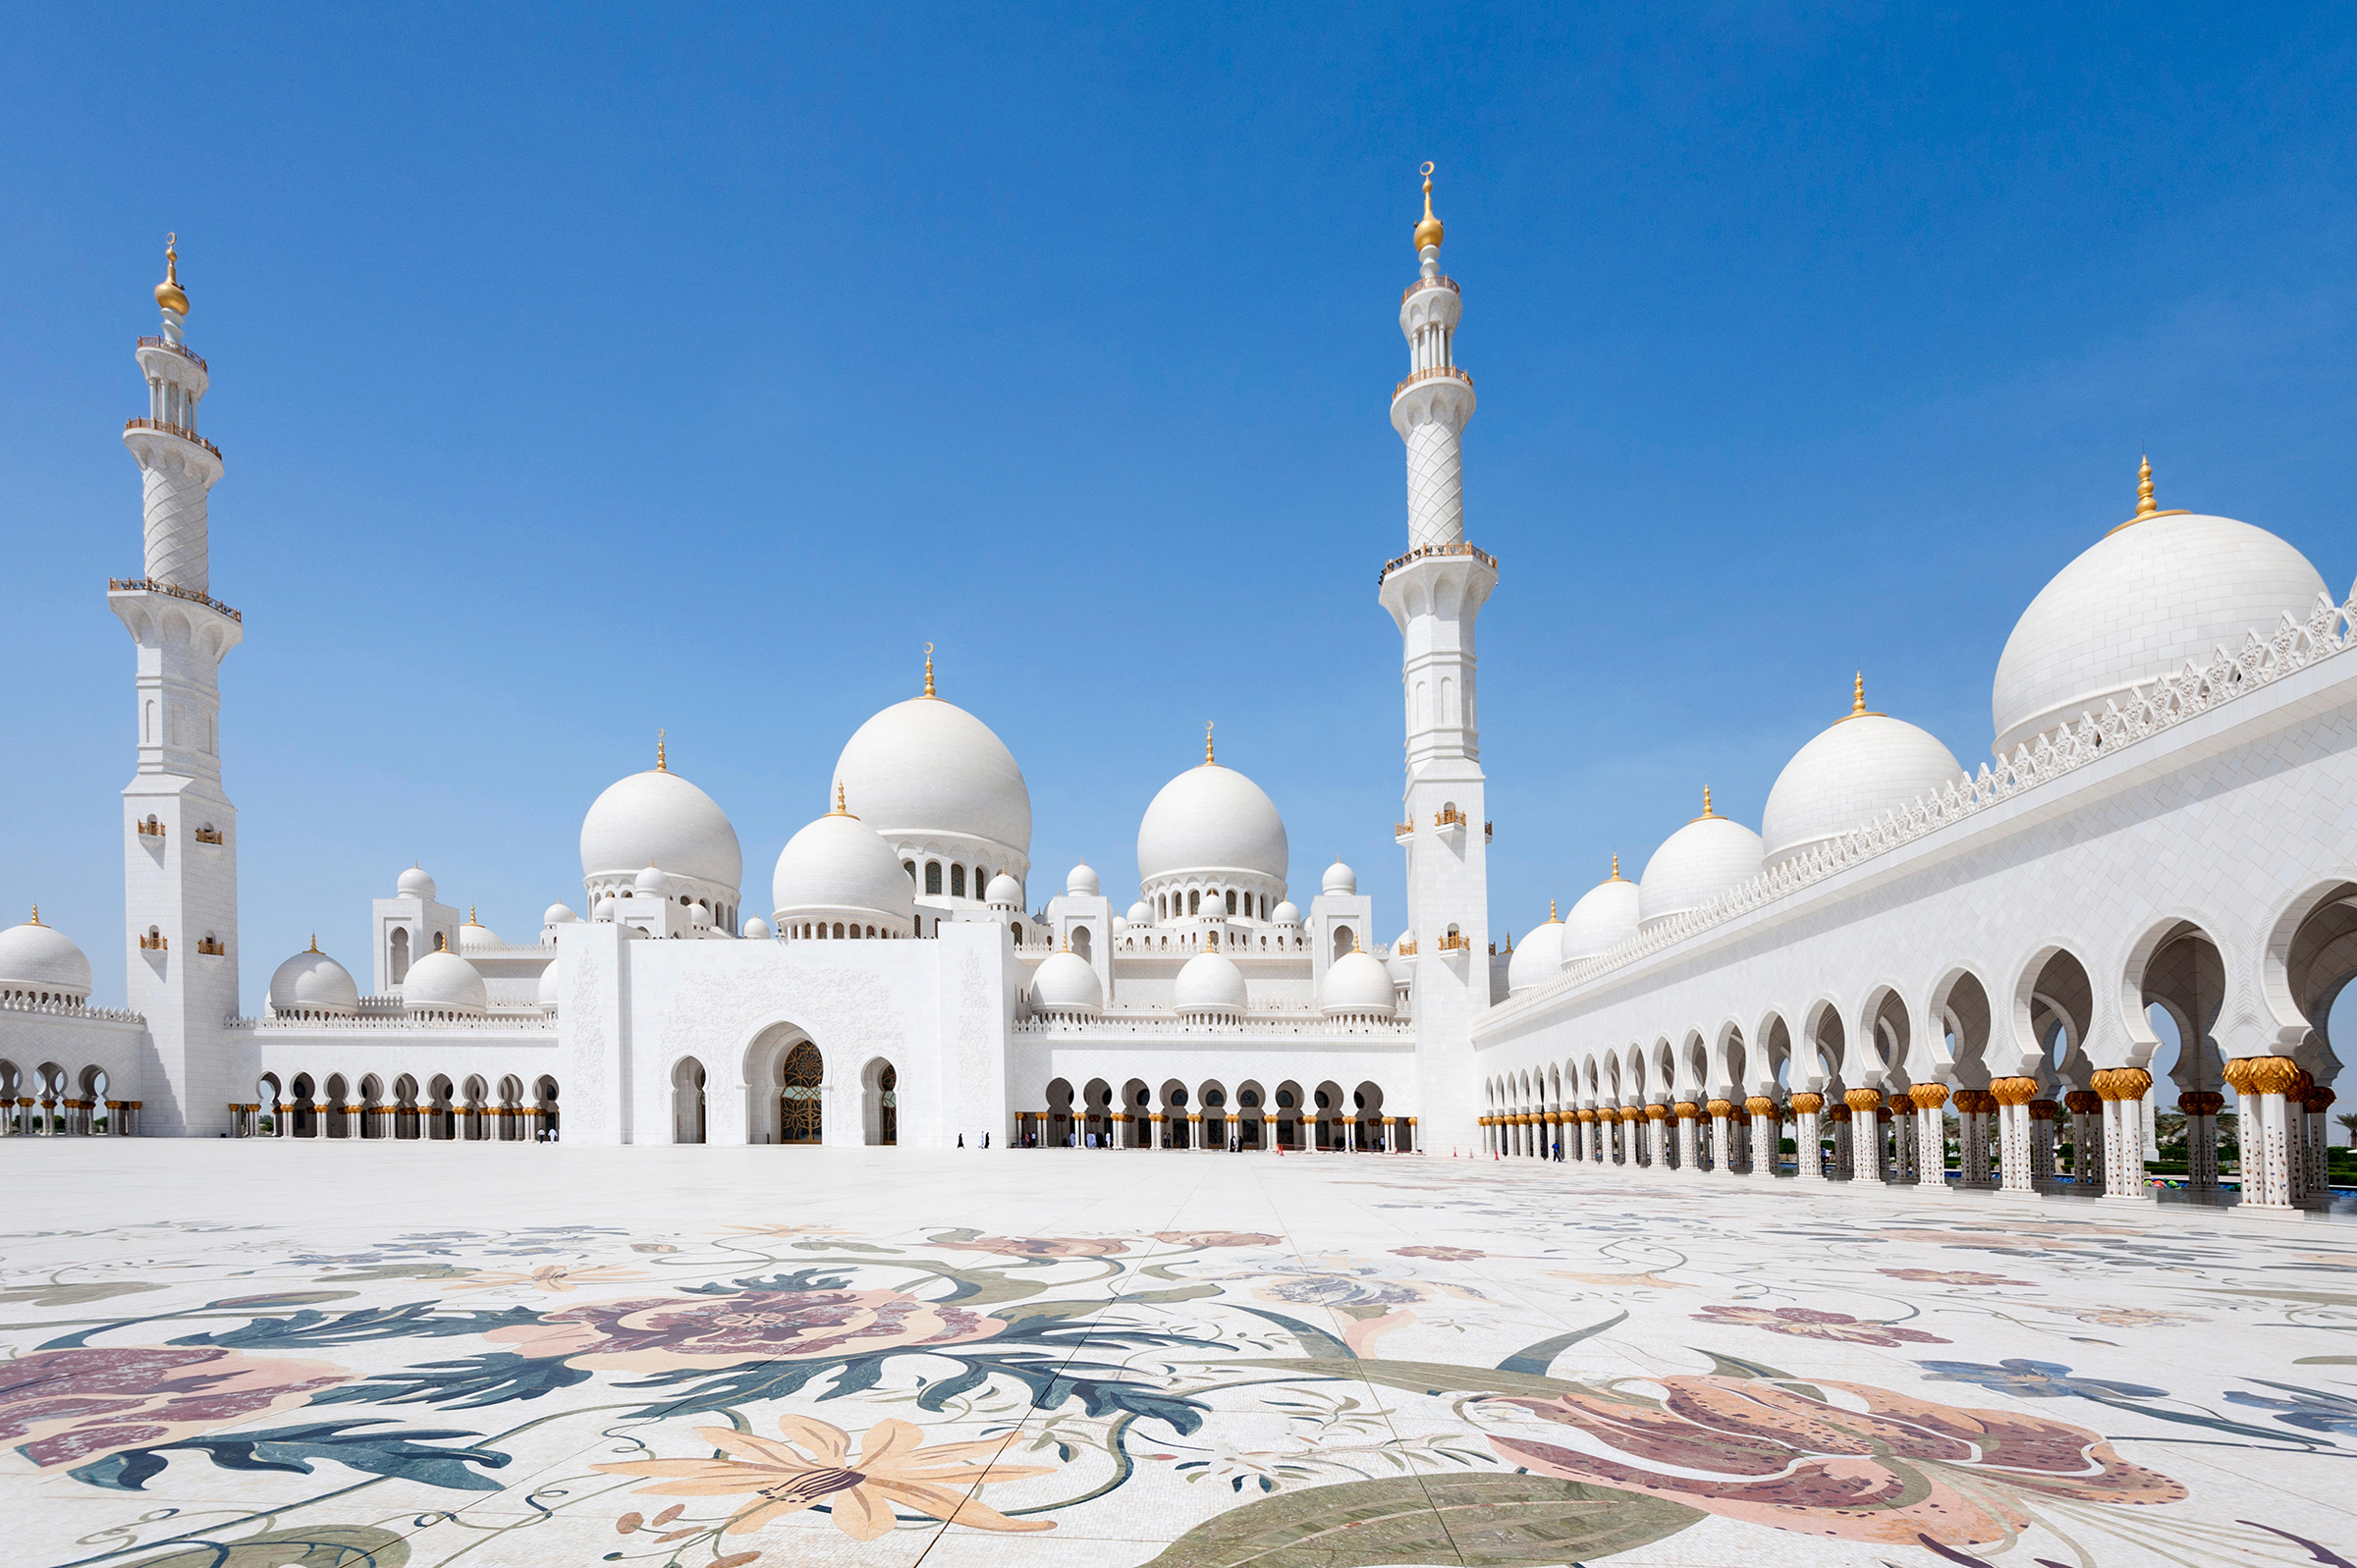 View of ornate courtyard of Sheikh Zayed Grand Mosque in Abu Dhabi United Arab Emirates